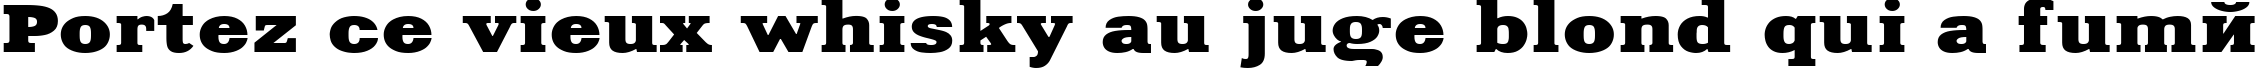 Пример написания шрифтом Aardvark115n текста на французском